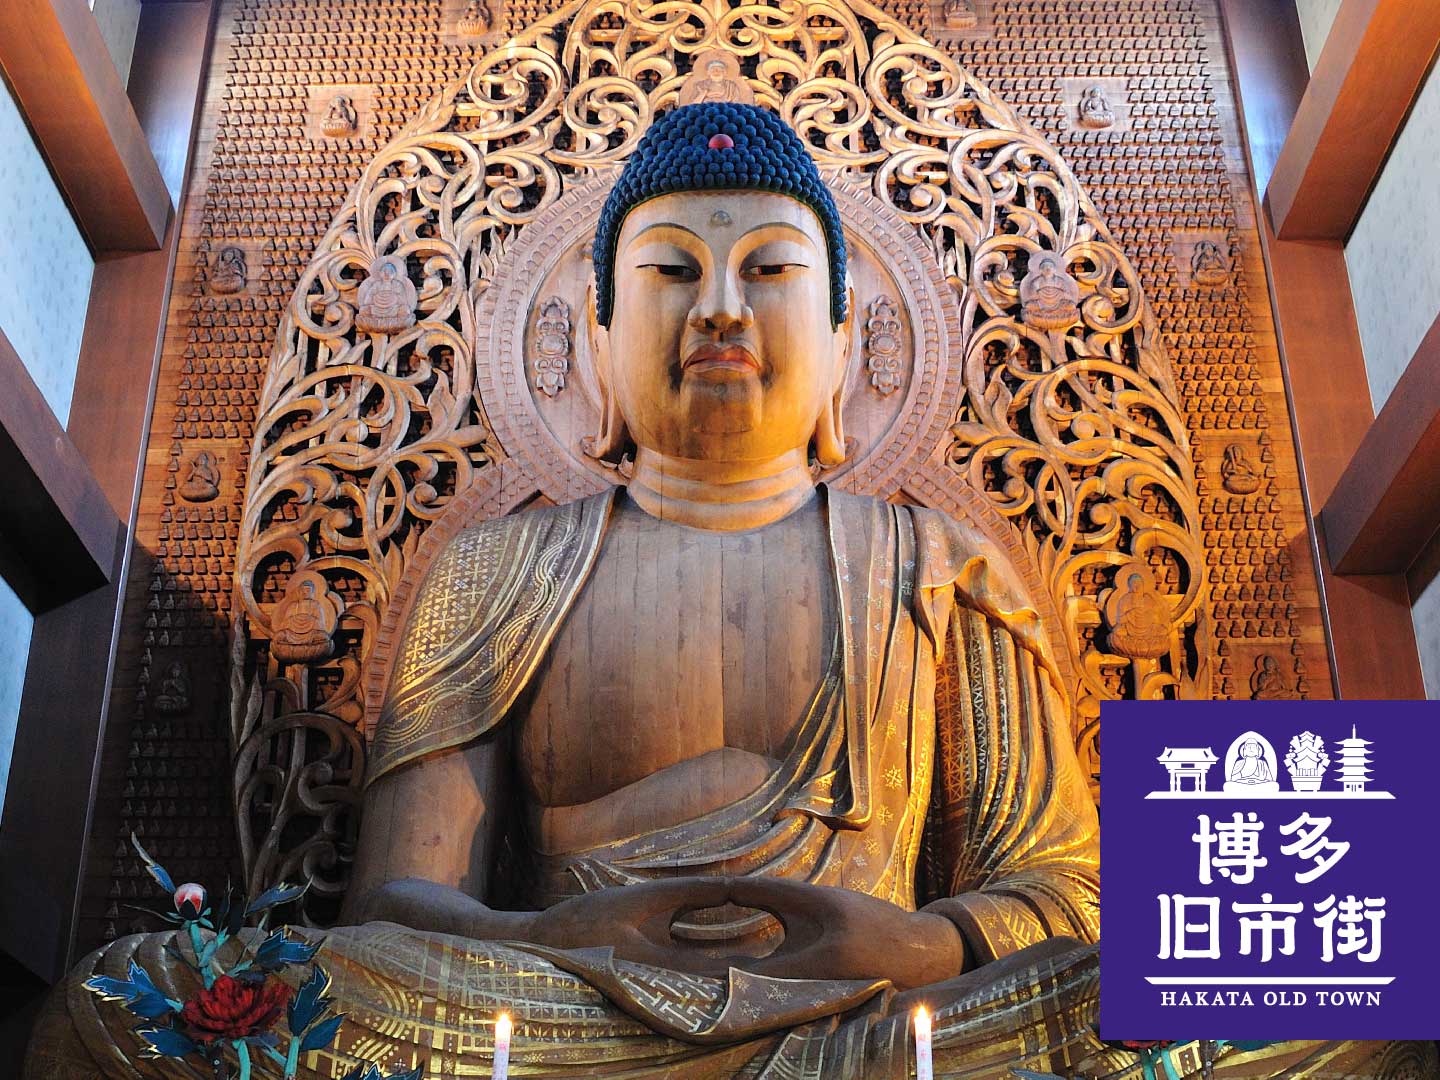 Top 11 des Statues de Bouddha Impressionnantes